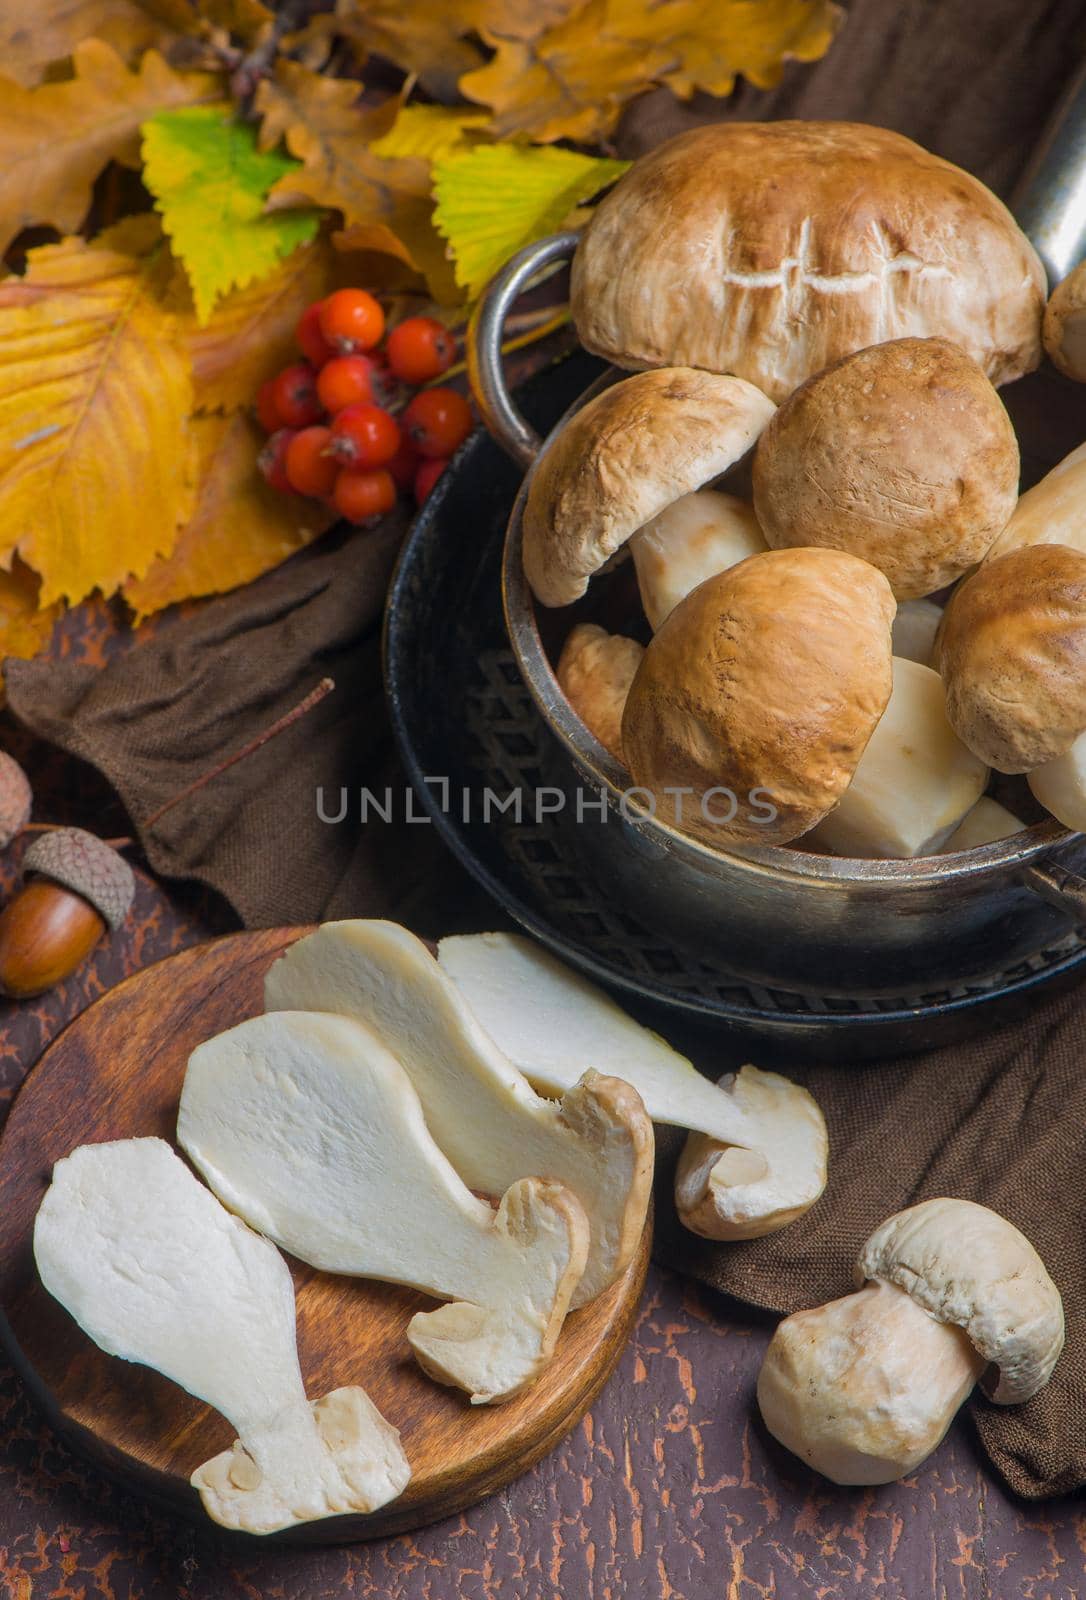 Mushroom Boletus edulis over Wooden Background. Cooking delicious organic mushroom.